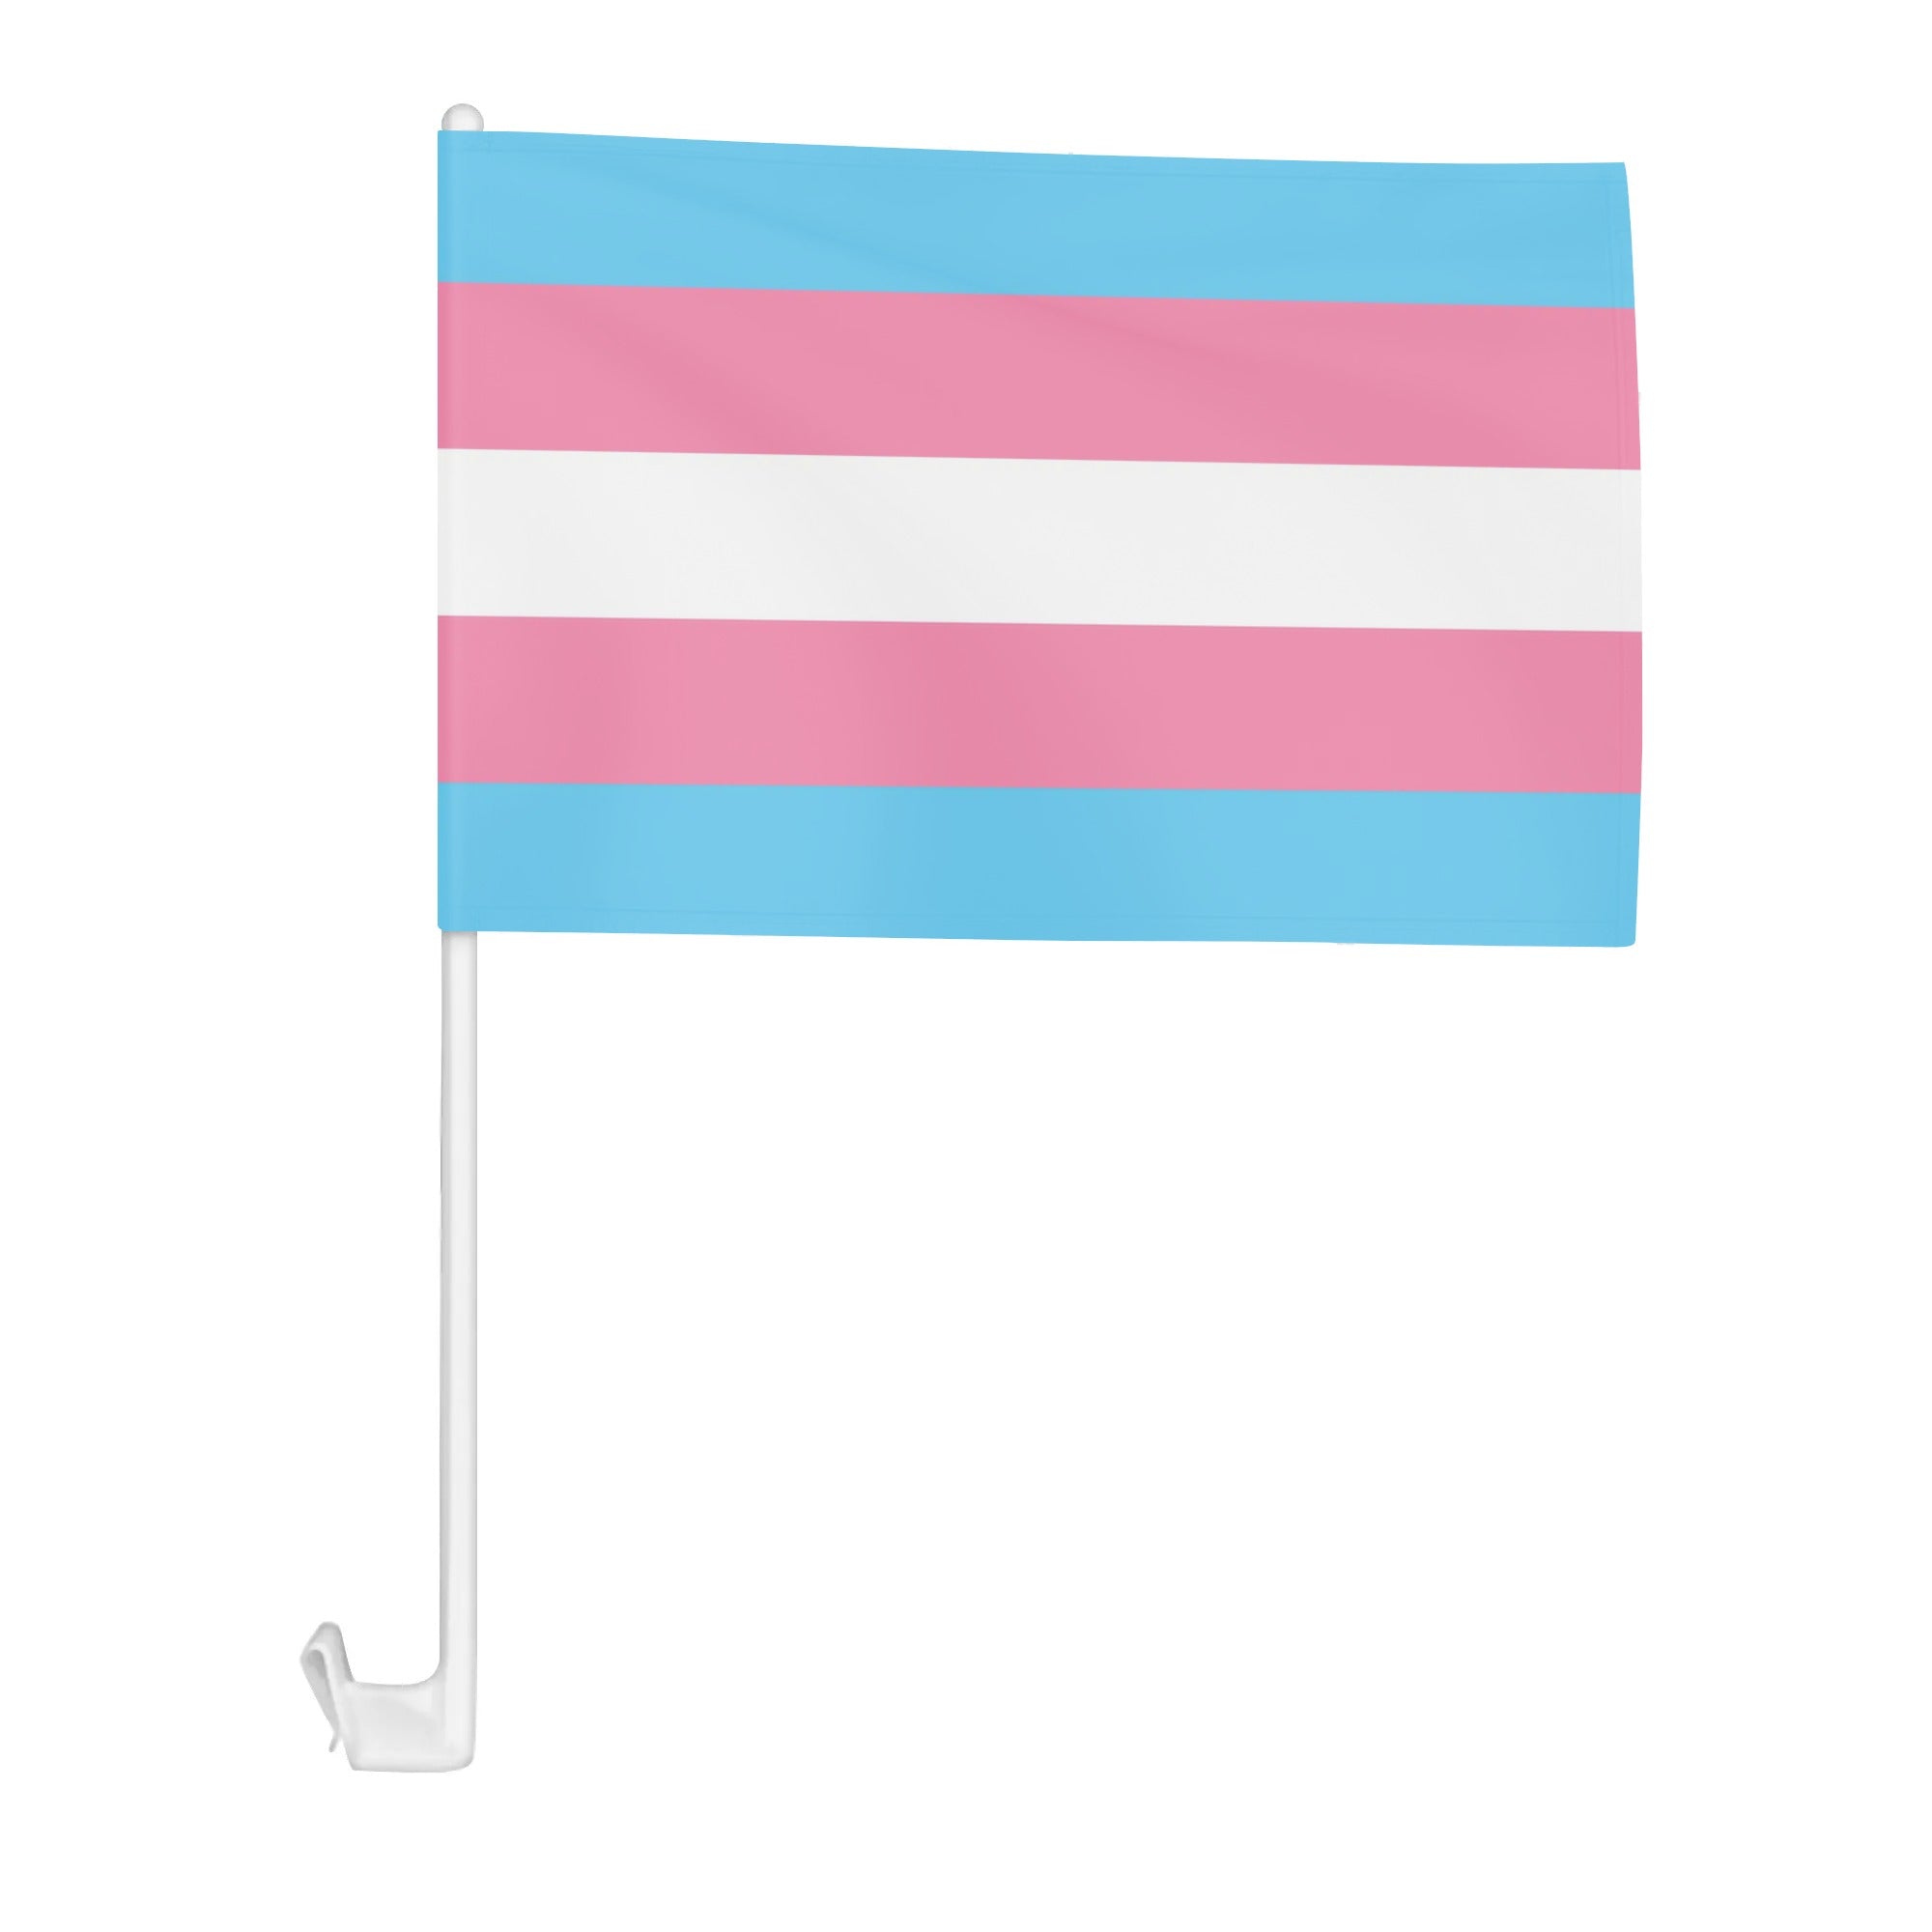 LGBT_Pride-Trans Pride Car Flag 12 x 18 - Rose Gold Co. Shop